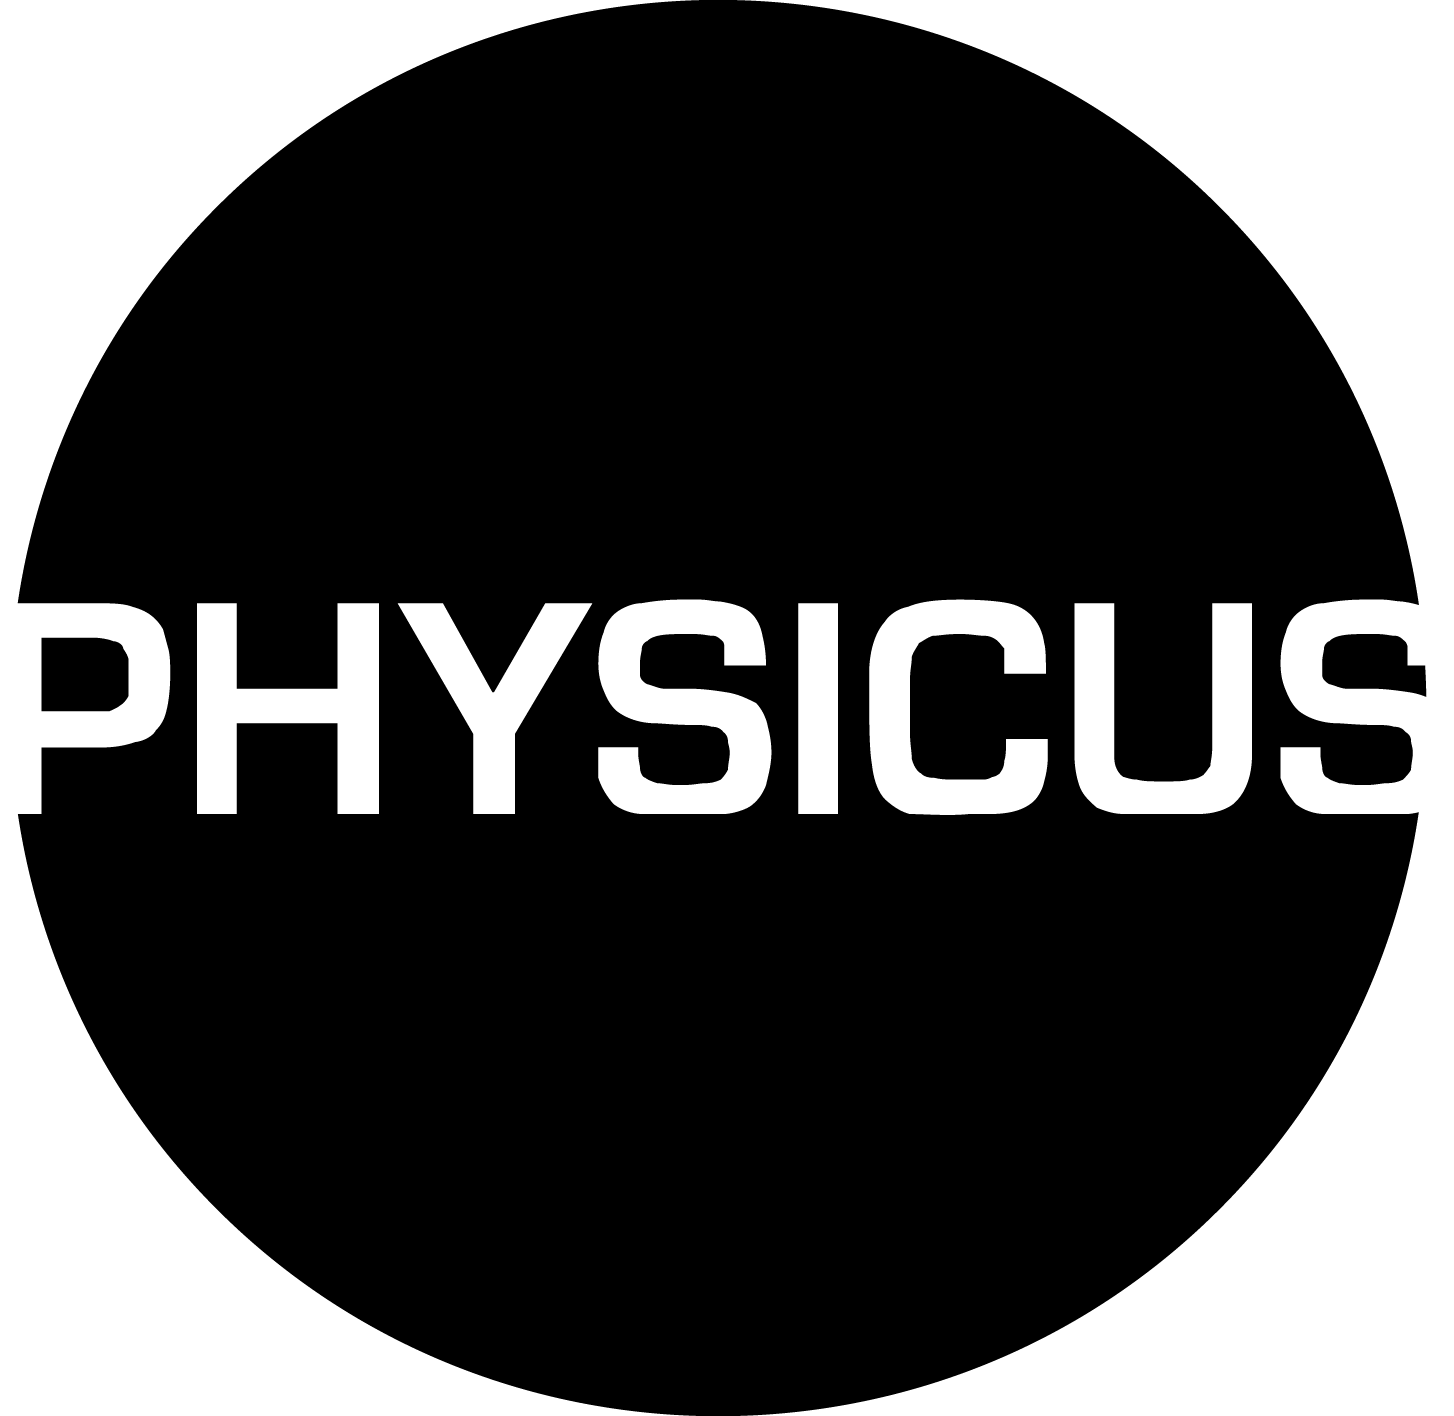 Physicus logo